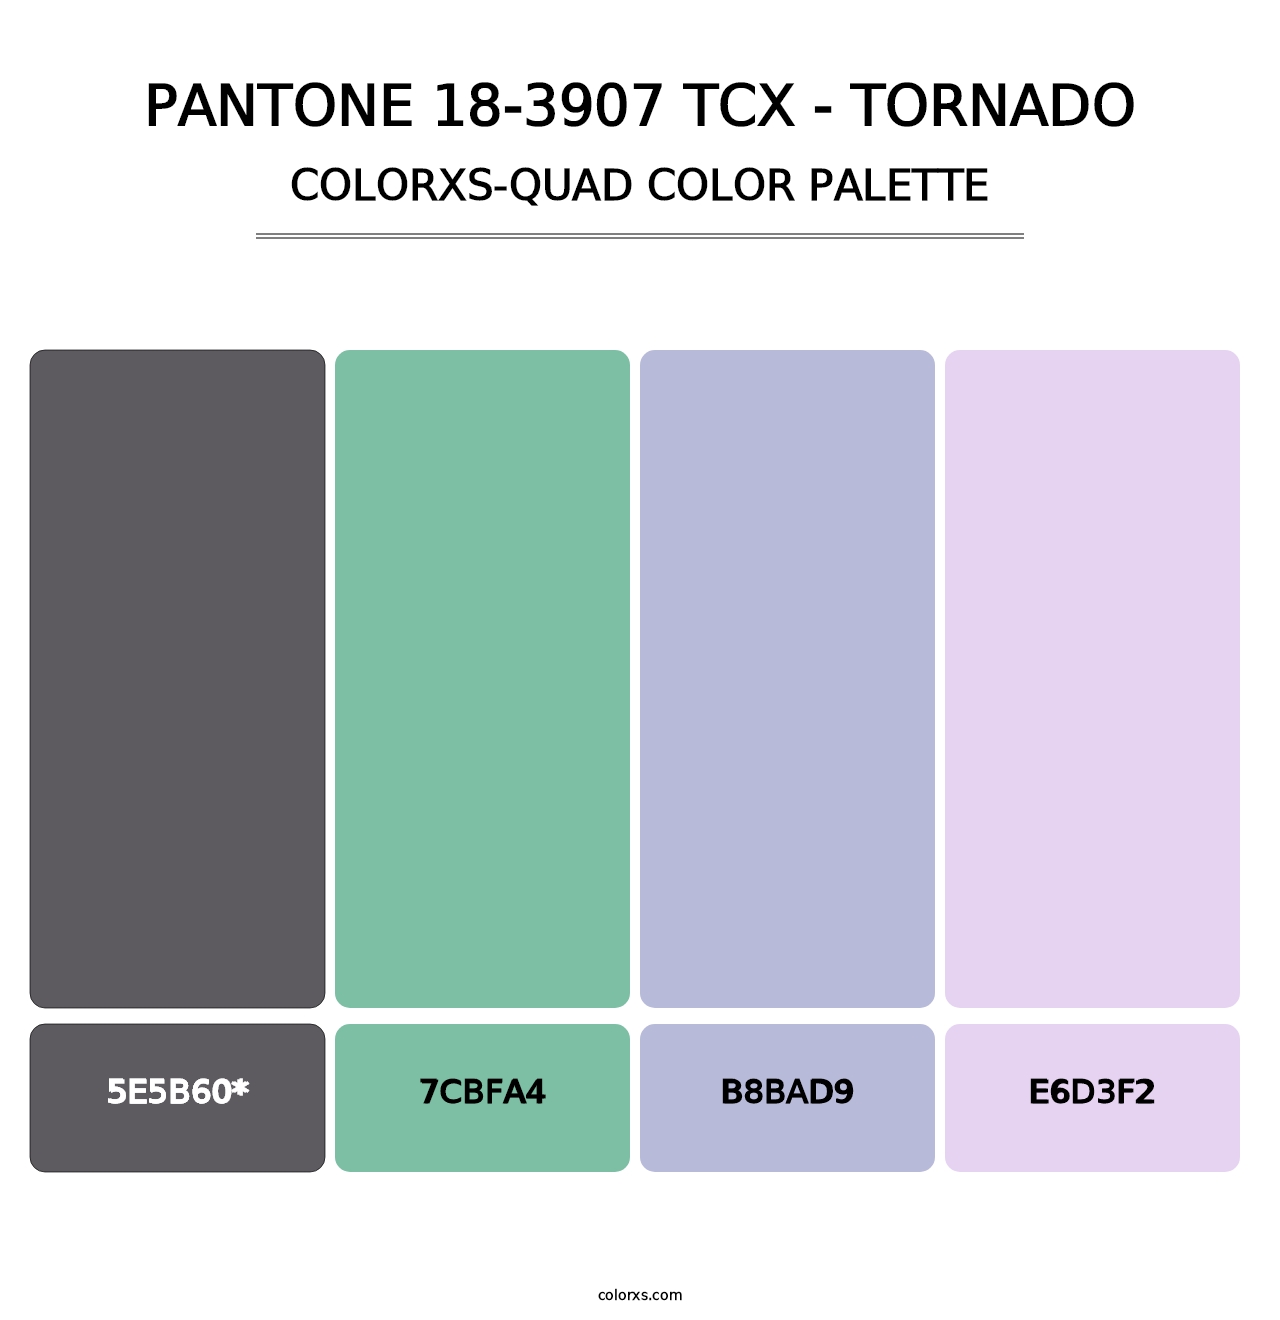 PANTONE 18-3907 TCX - Tornado - Colorxs Quad Palette